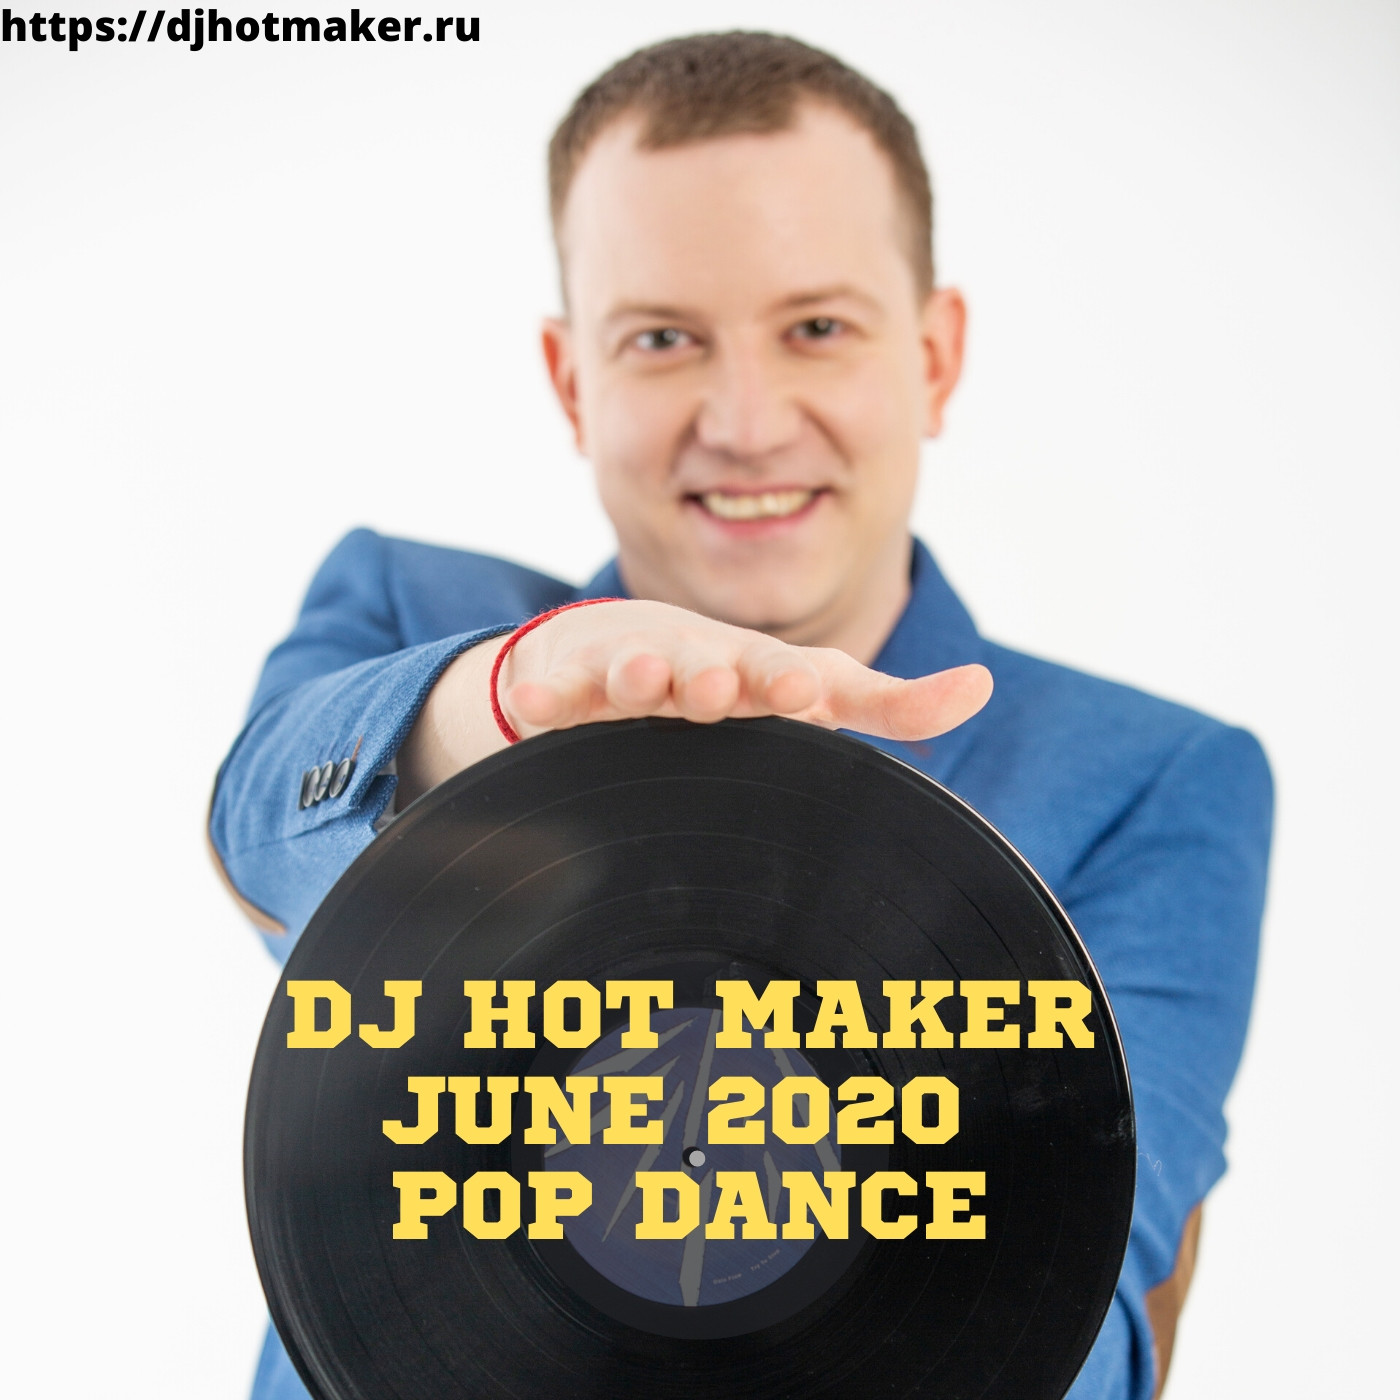 DJ Hot Maker - June 2020 Pop Dance Promo